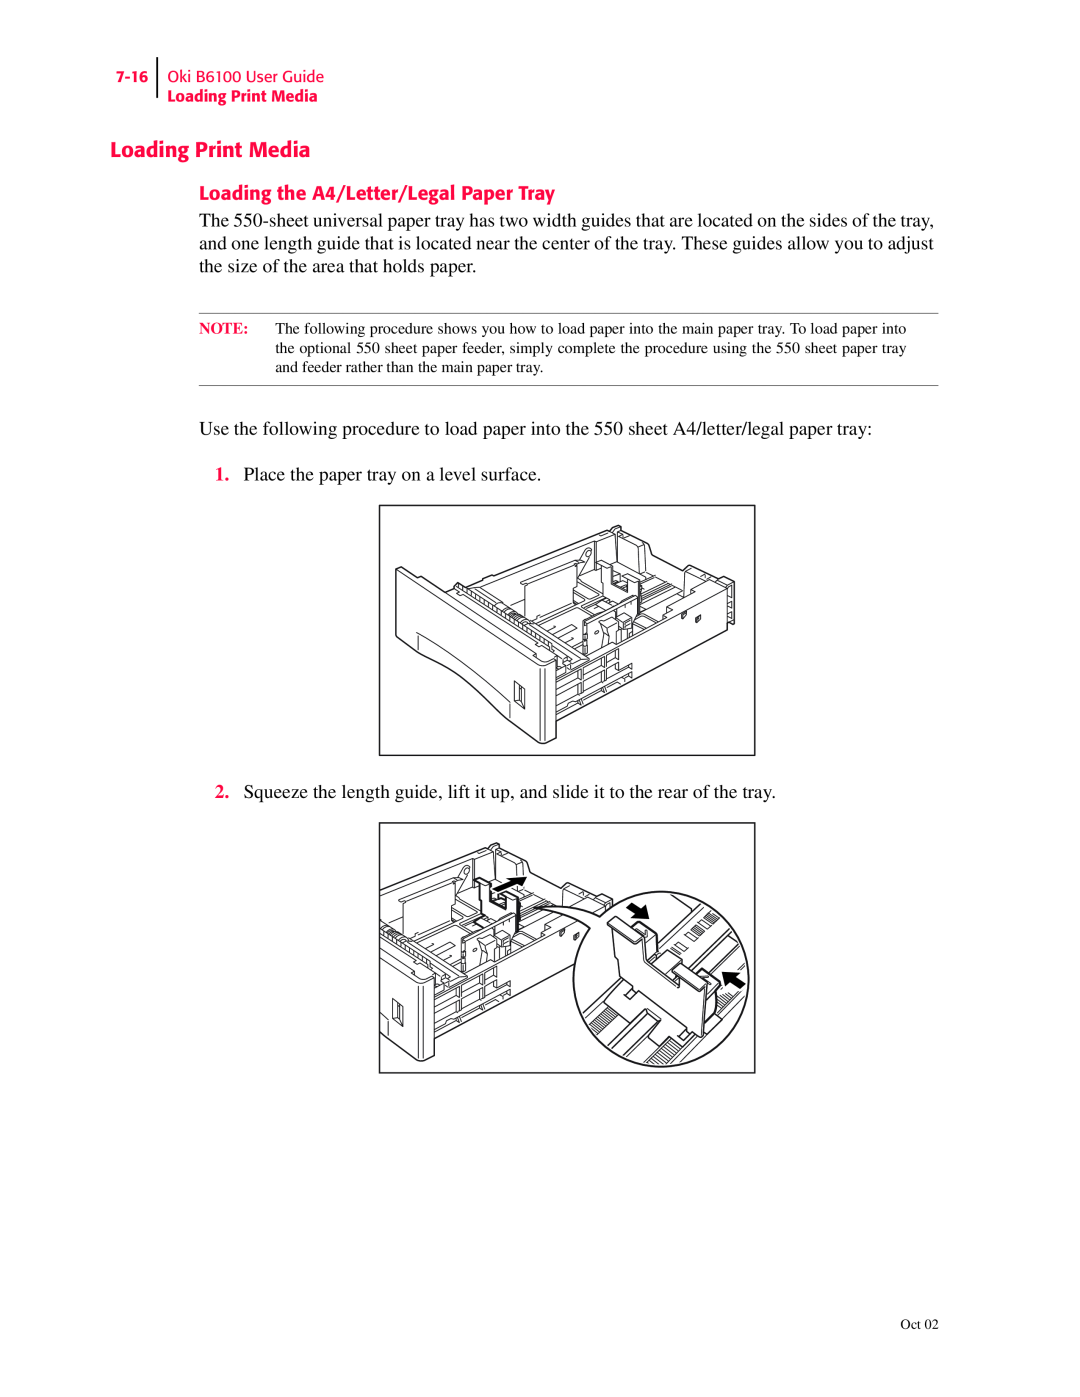 Oki 6100 manual Loading Print Media, Loading the A4/Letter/Legal Paper Tray 